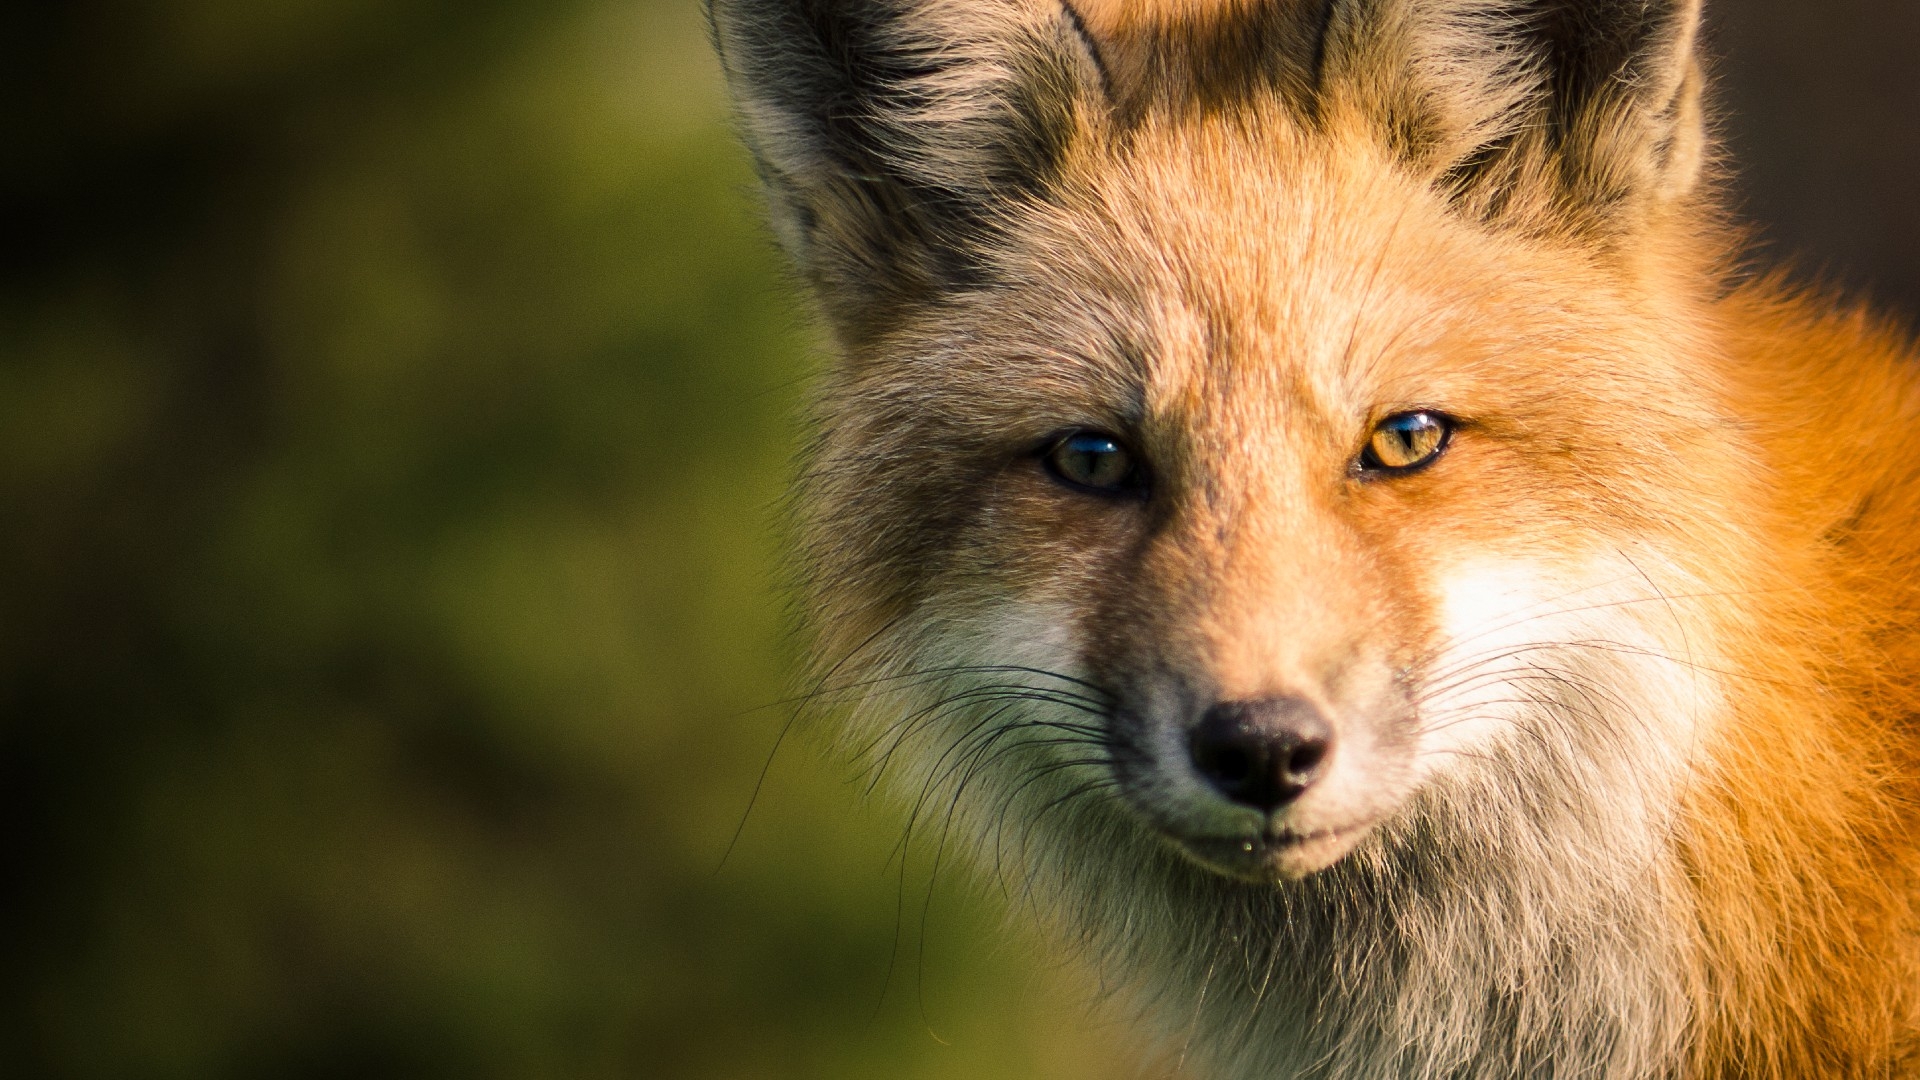 Potentially rabid fox captured in Arlington - WTOP News